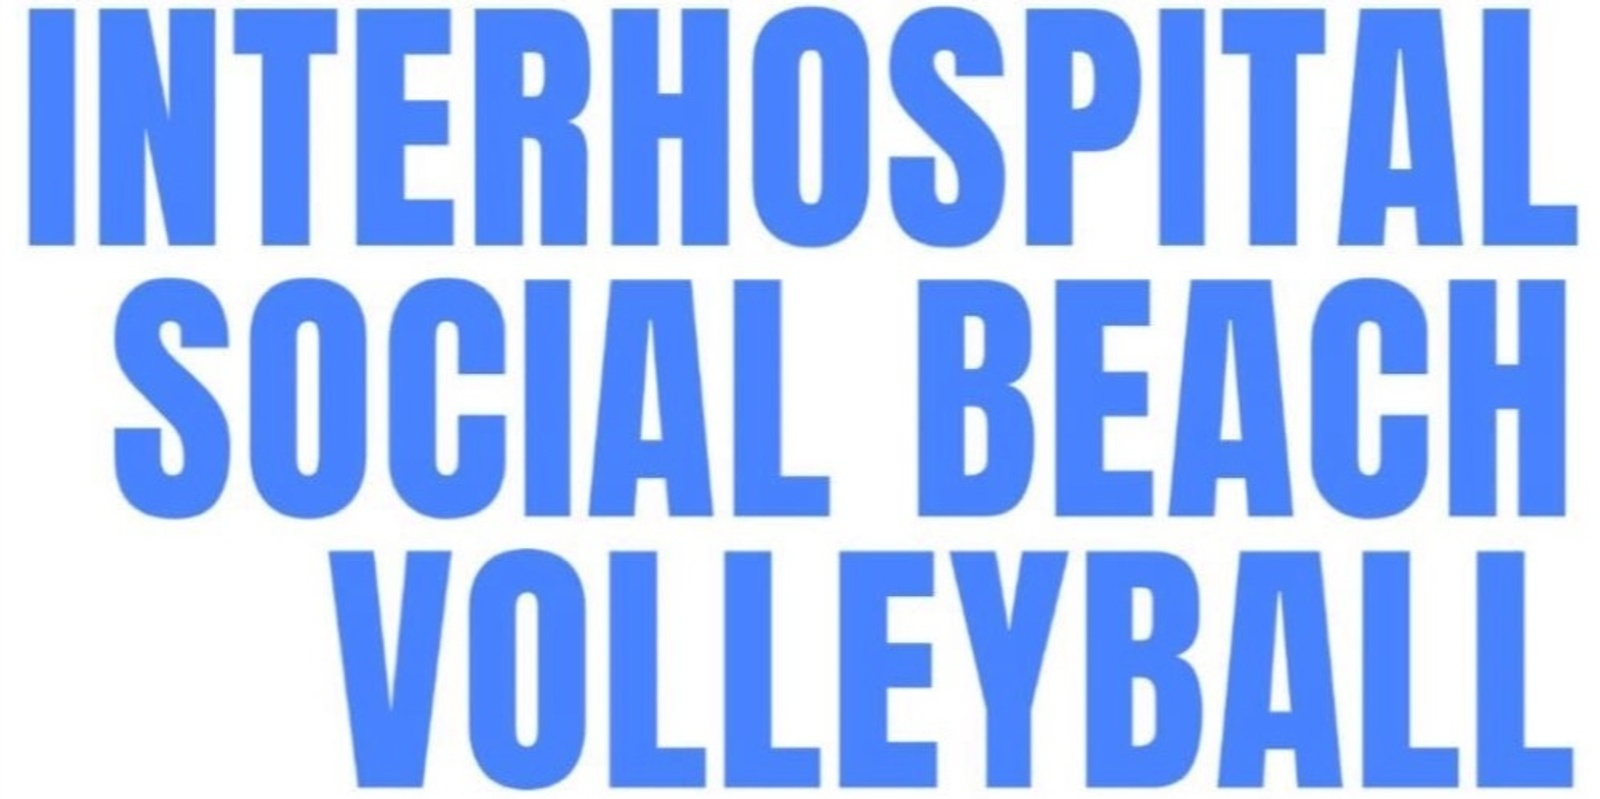 Banner image for Interhospital Social Beach Volleyball